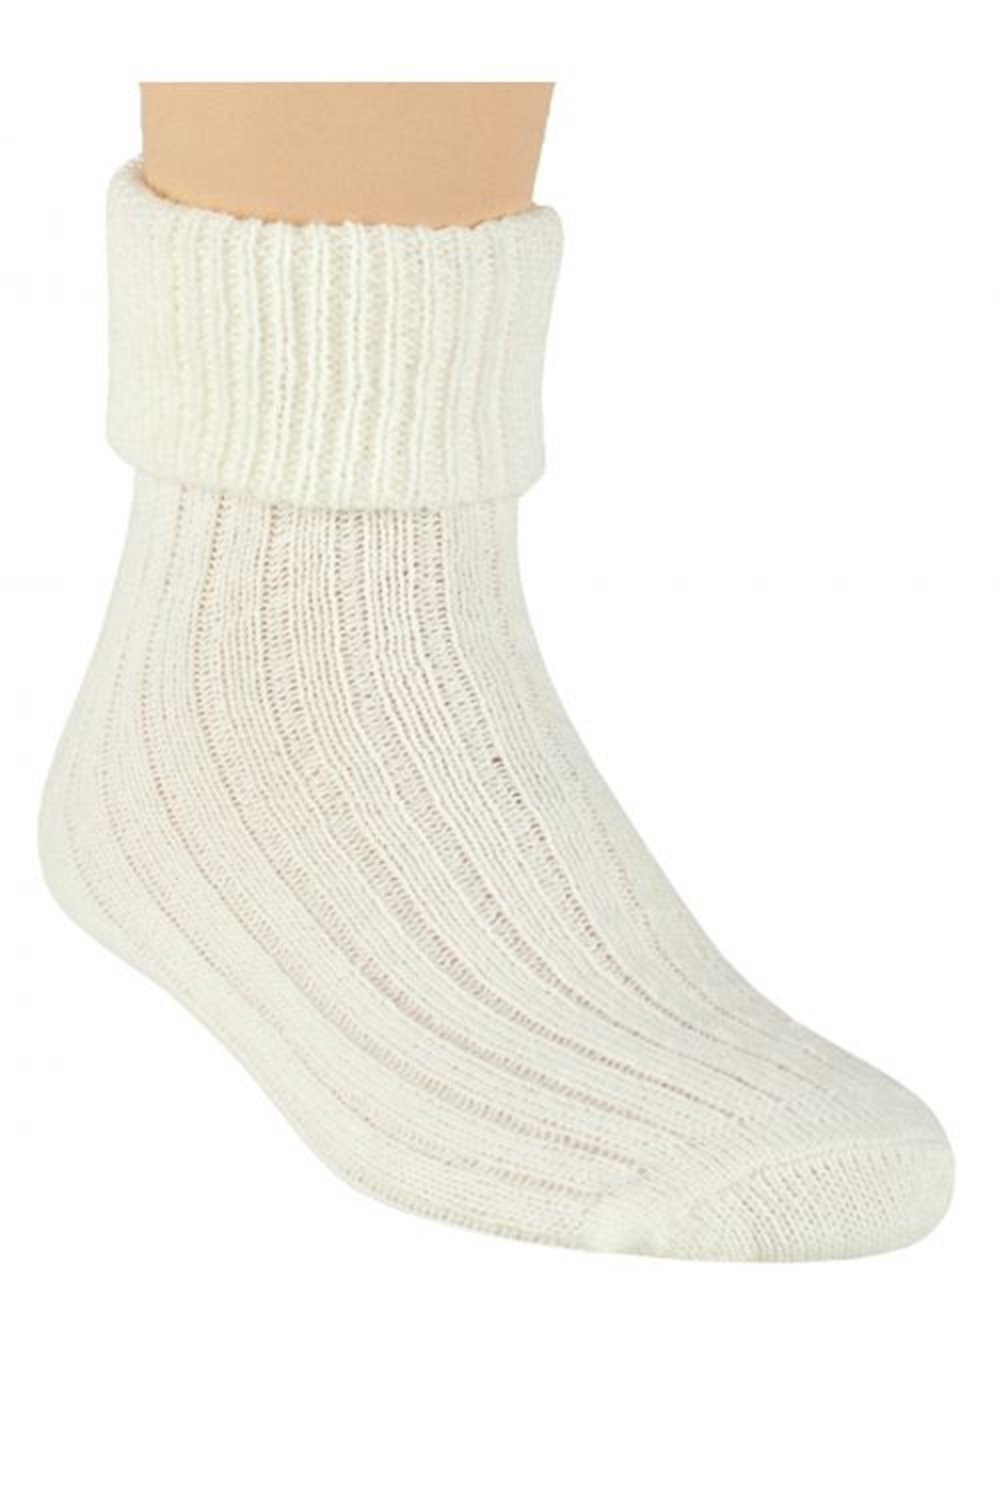 E-shop Dámské ponožky 067 cream - Steven